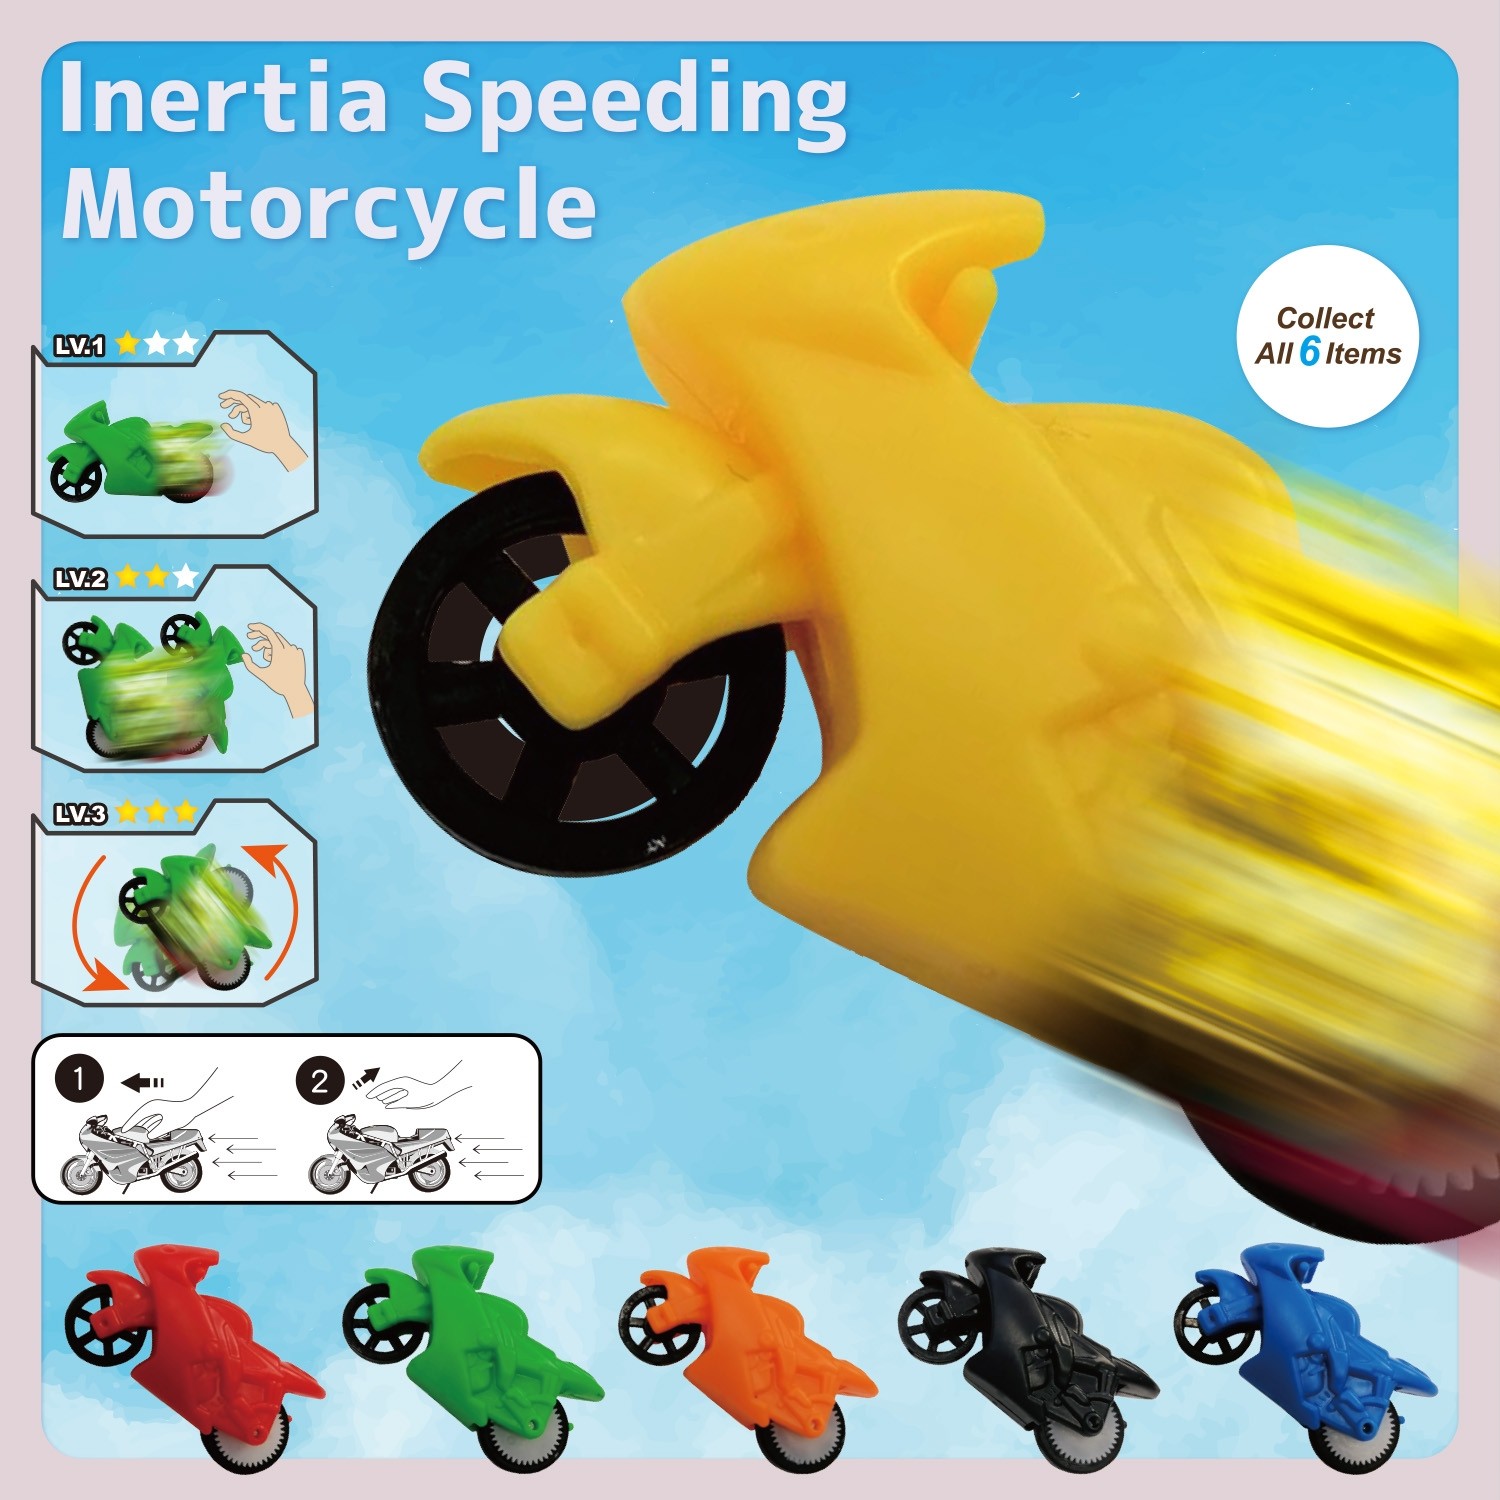 Inertia Speeding Motorcycle (No printing)